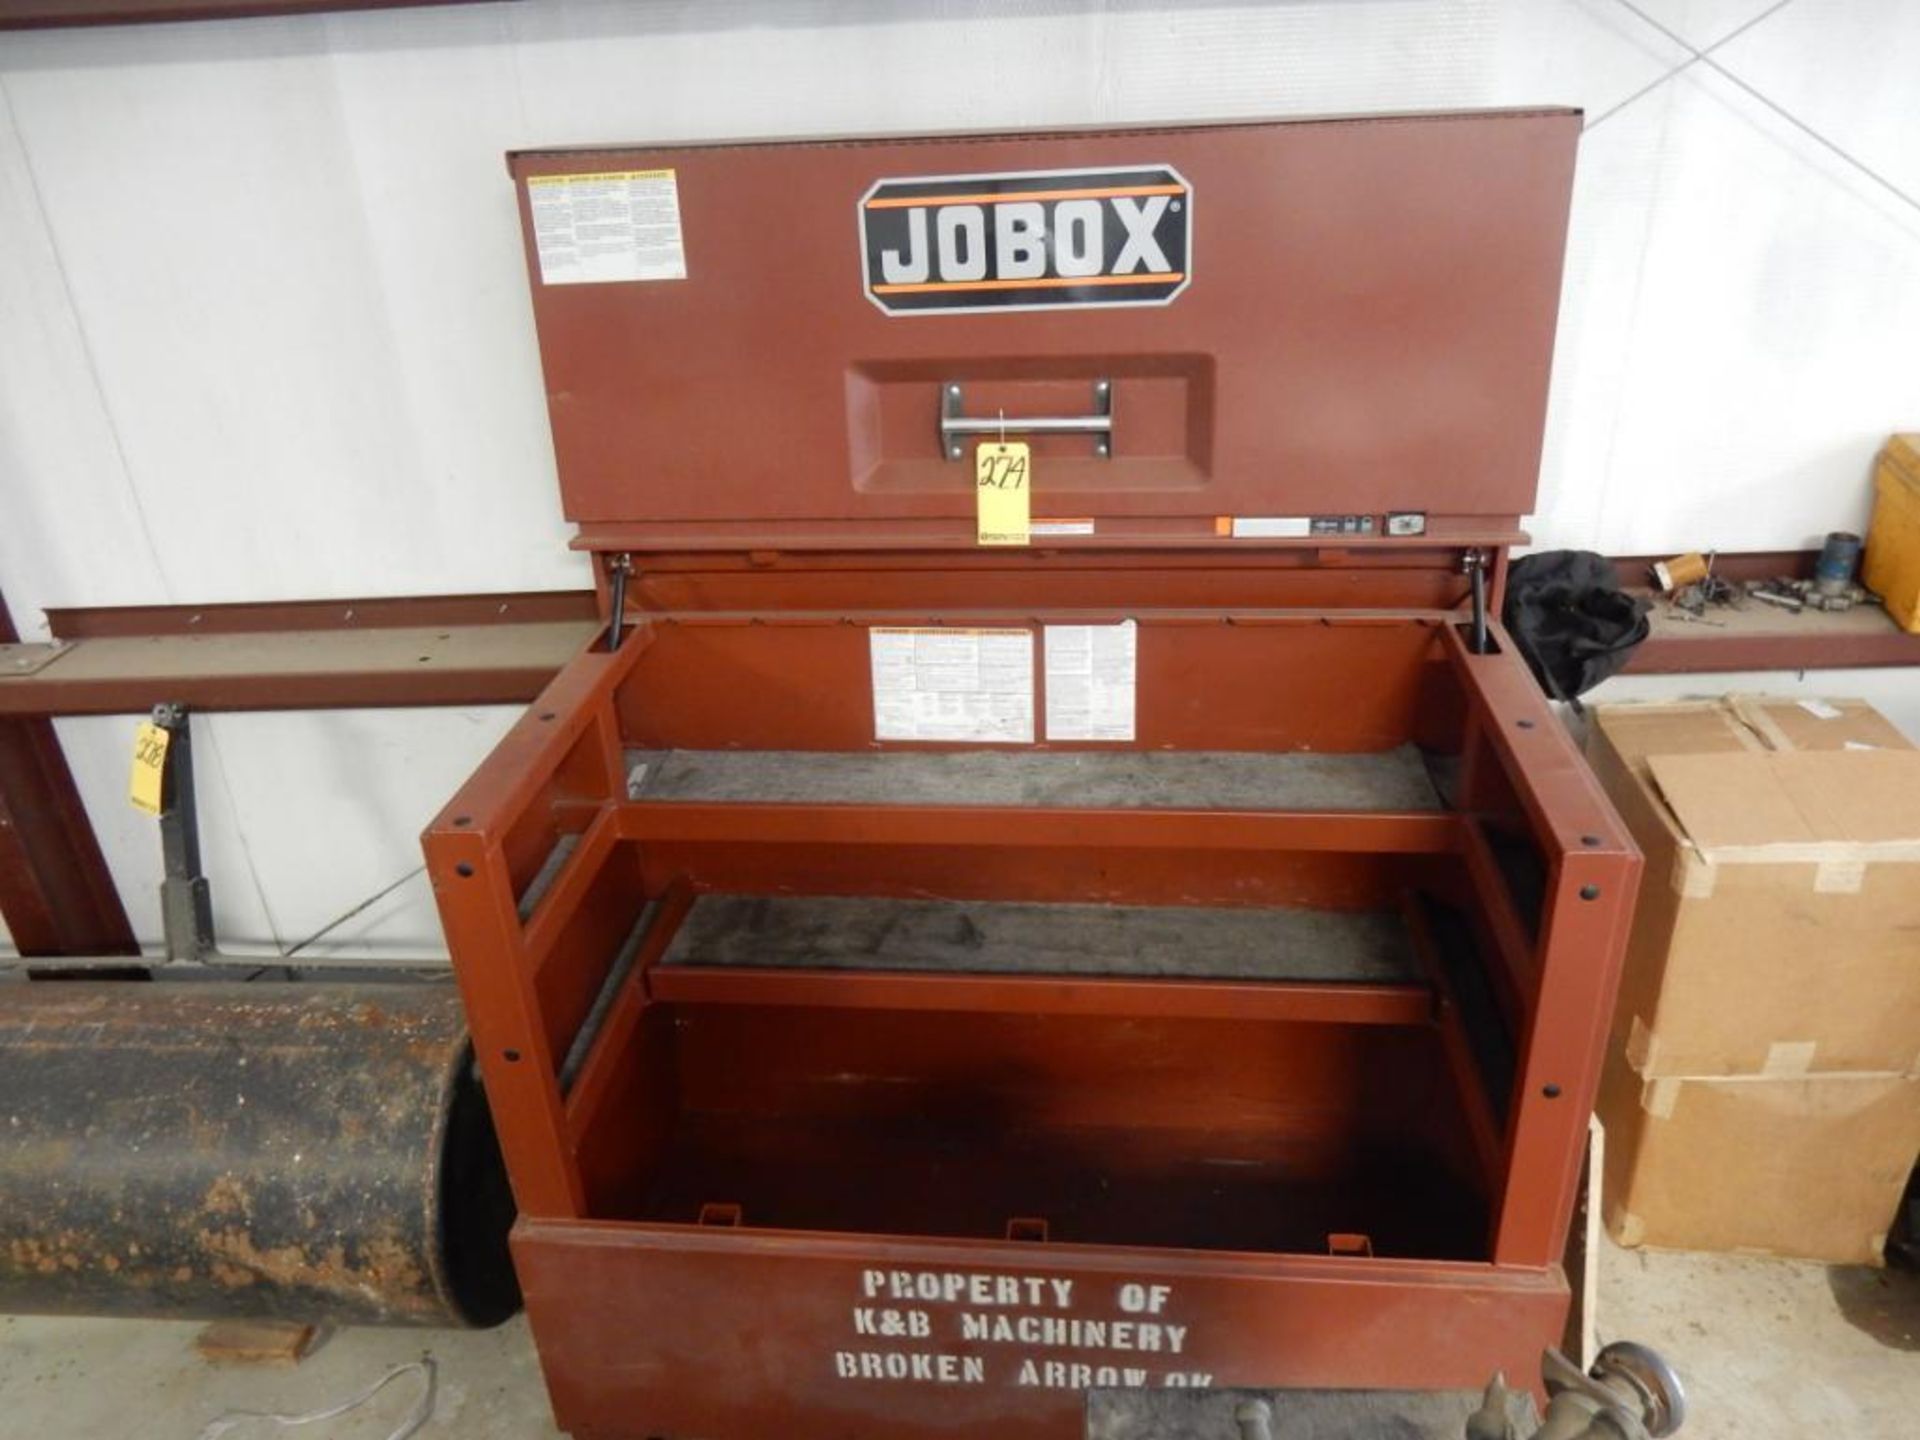 UPRIGHT JOBOX EMPTY TOOL BOX